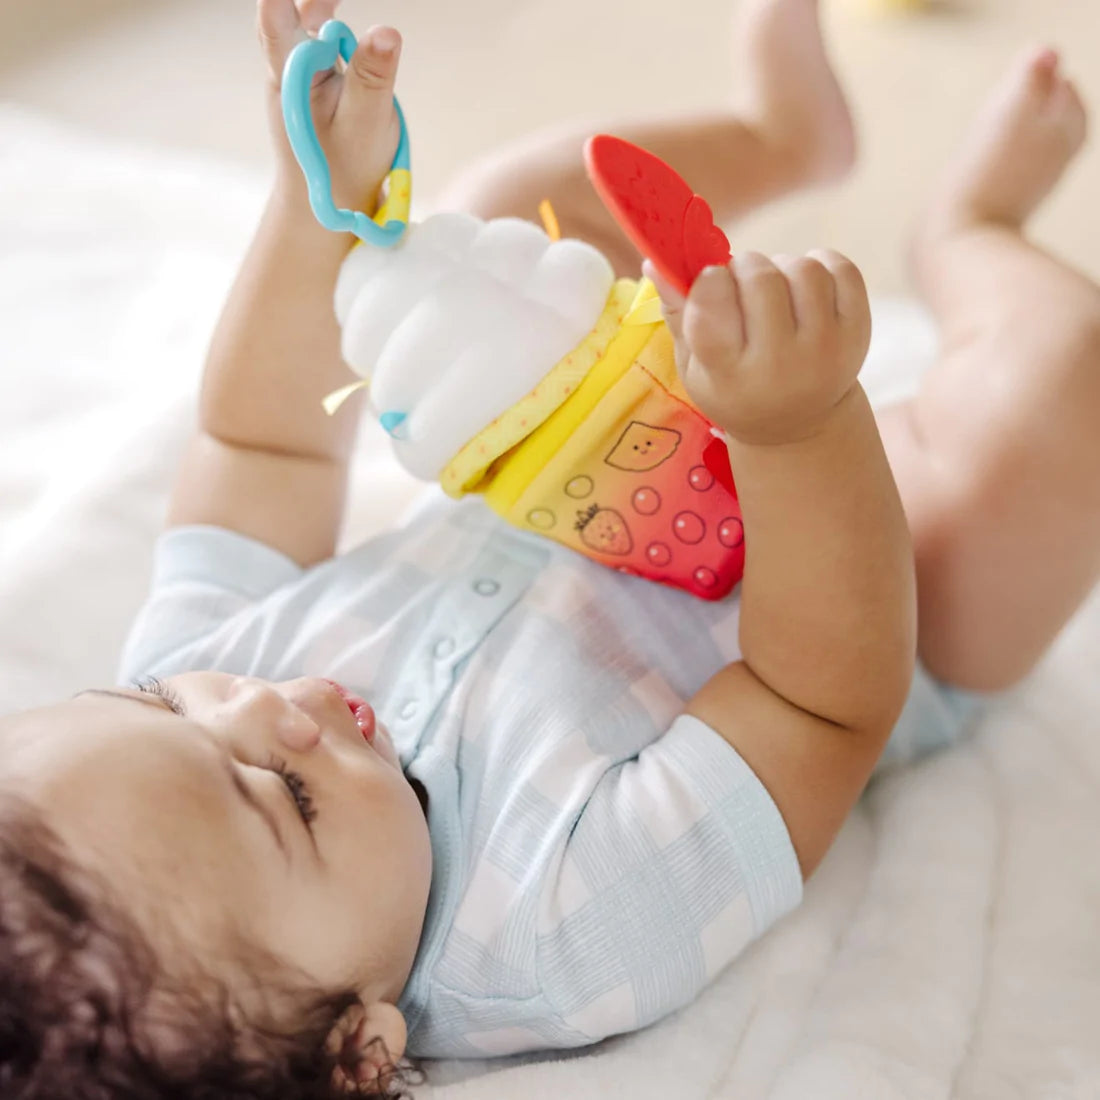 Melissa and Doug: zabawka sensoryczna dla niemowląt Bubble Tea Take-Along - Noski Noski